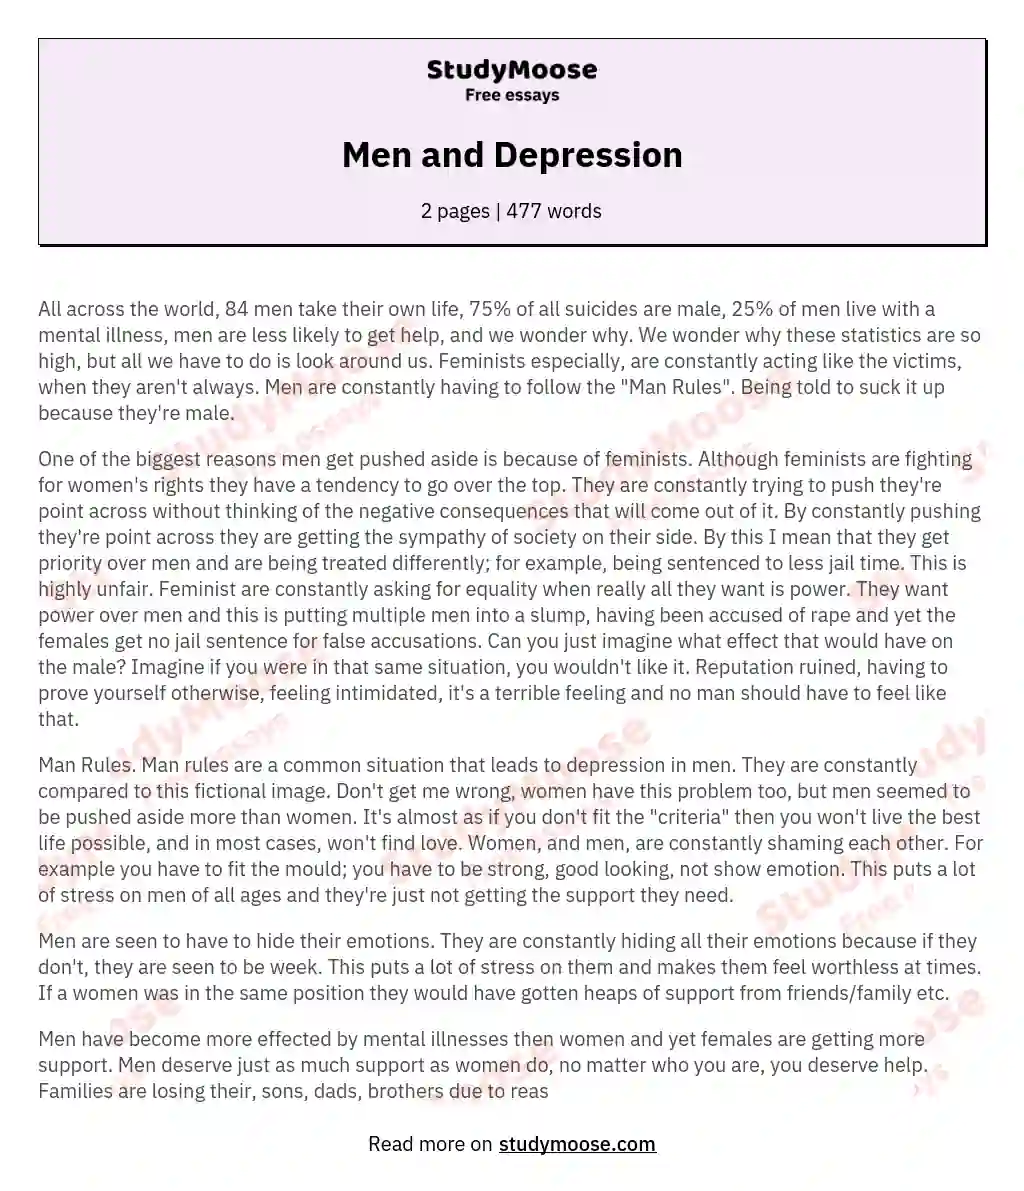 Men and Depression essay